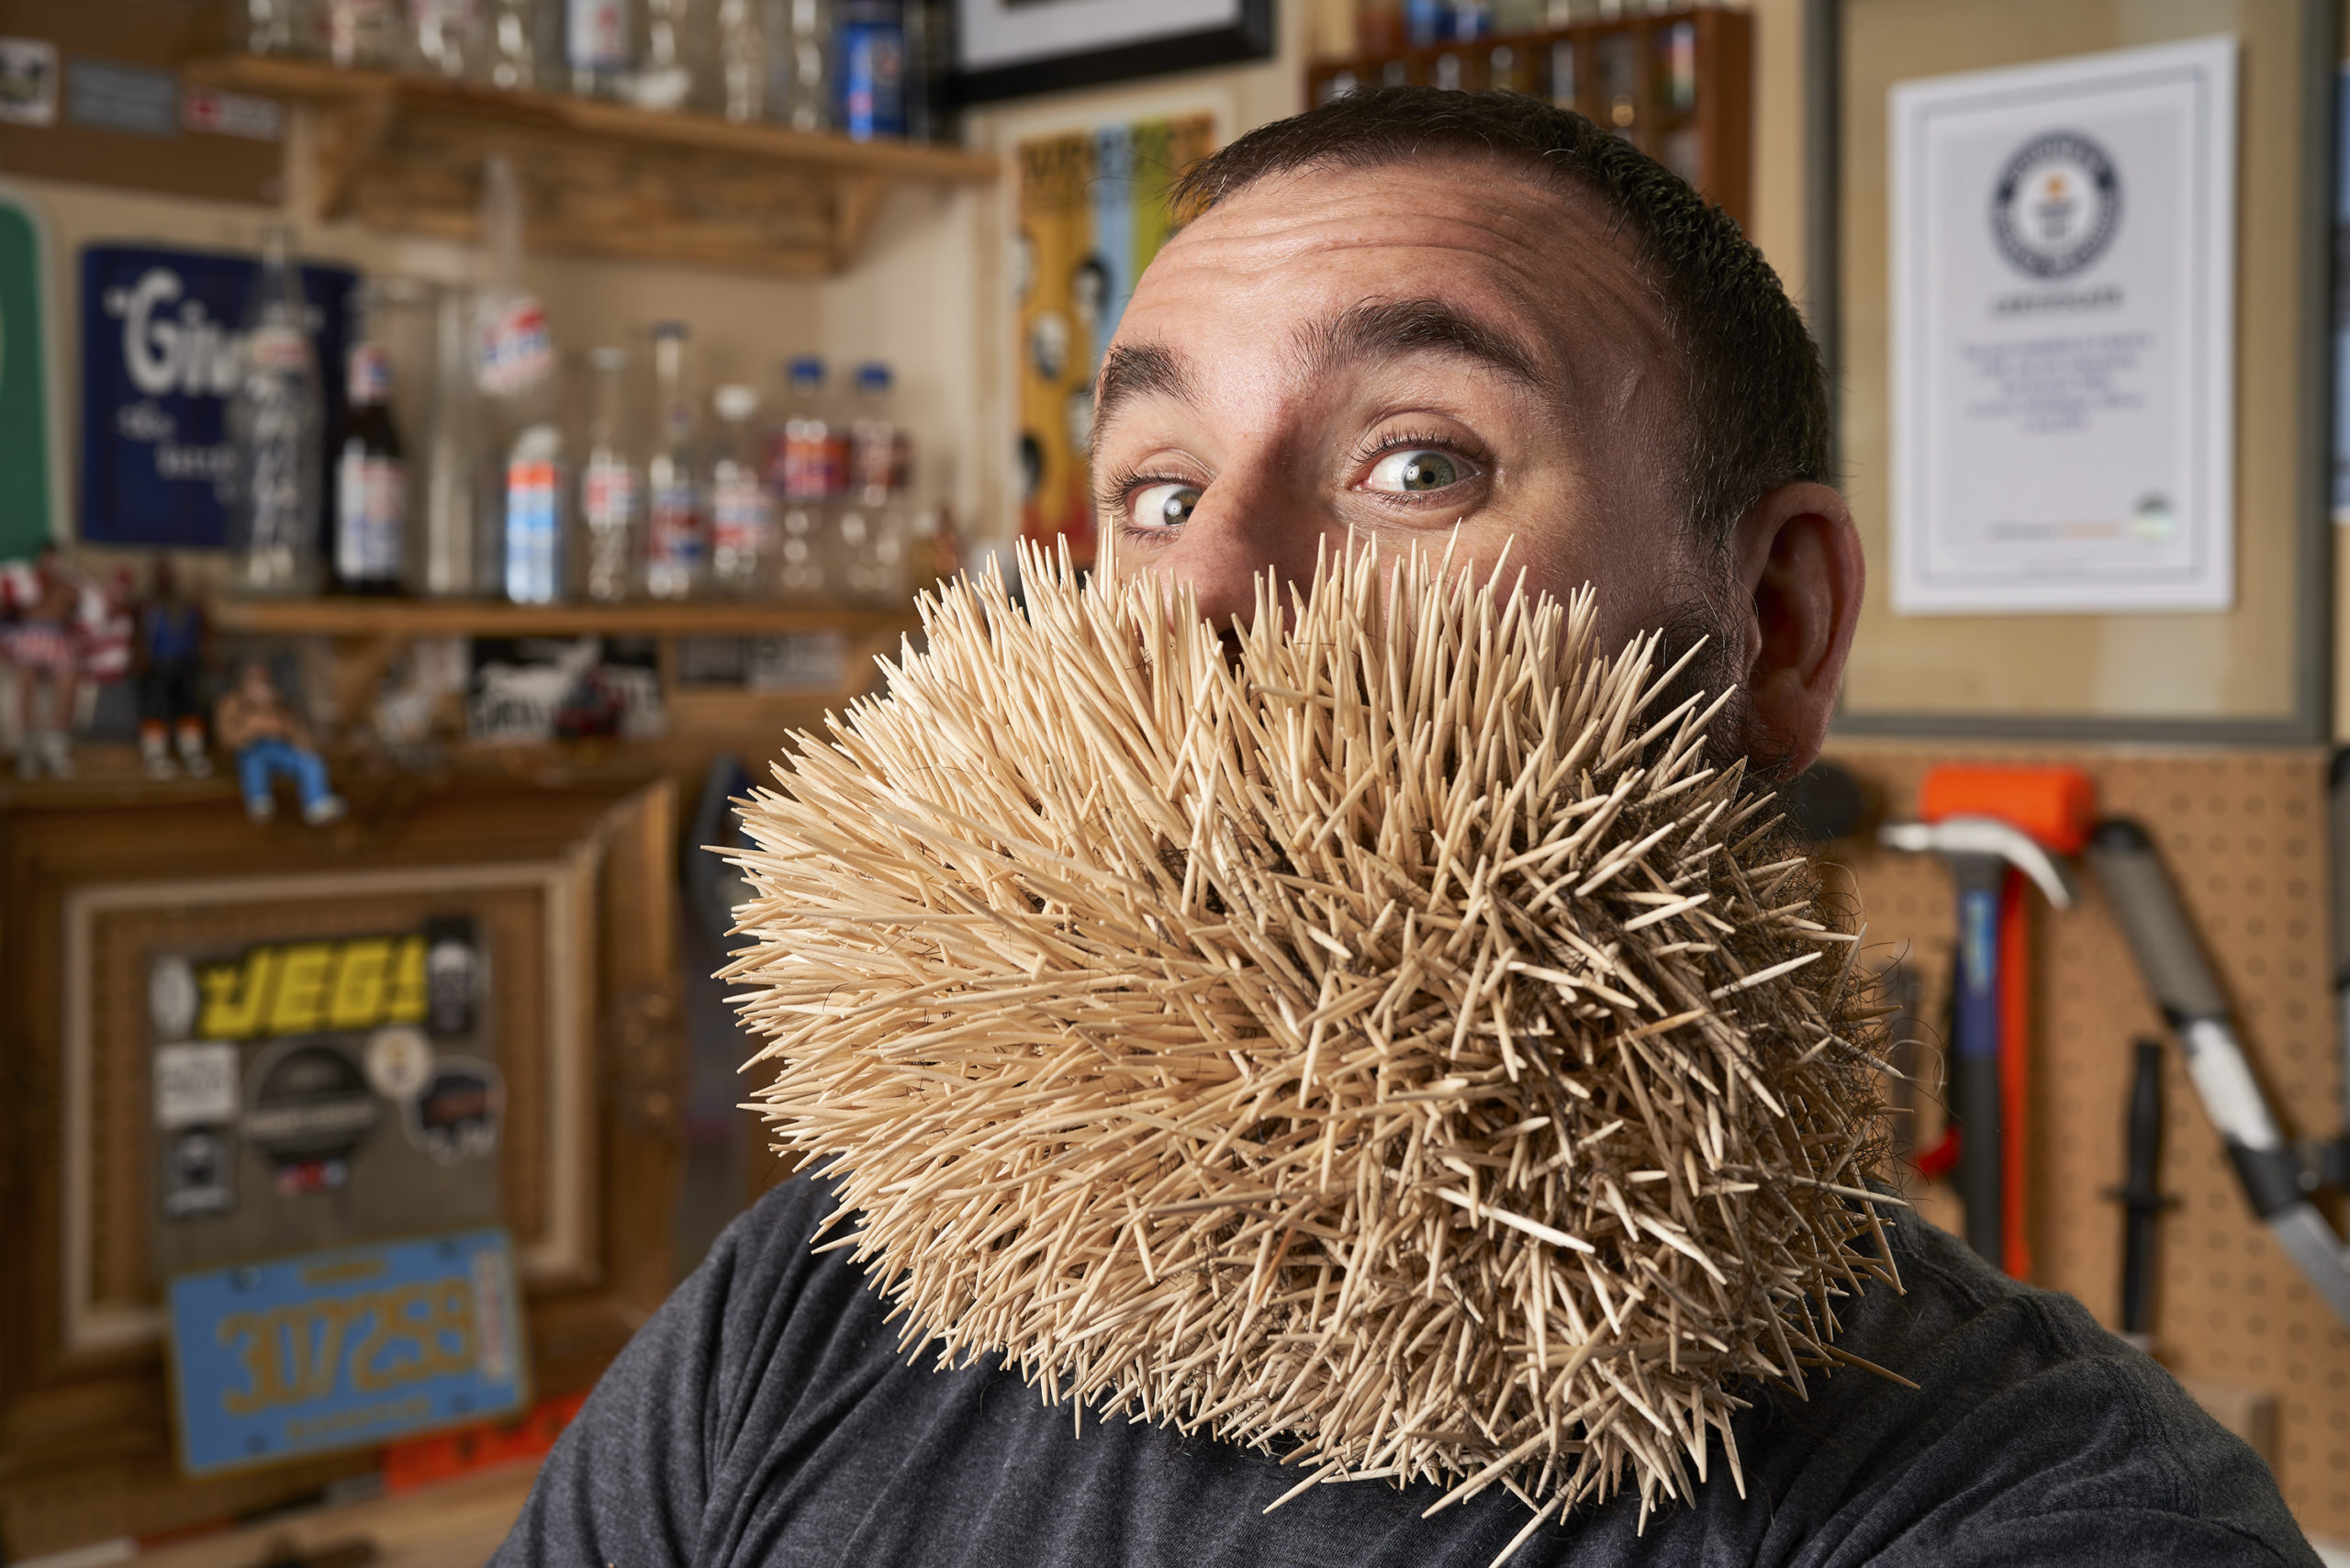 Joel Strasser - Most toothpicks in a beard Guinness World Records 2020 Photo Credit: James Ellerker/Guinness World Records